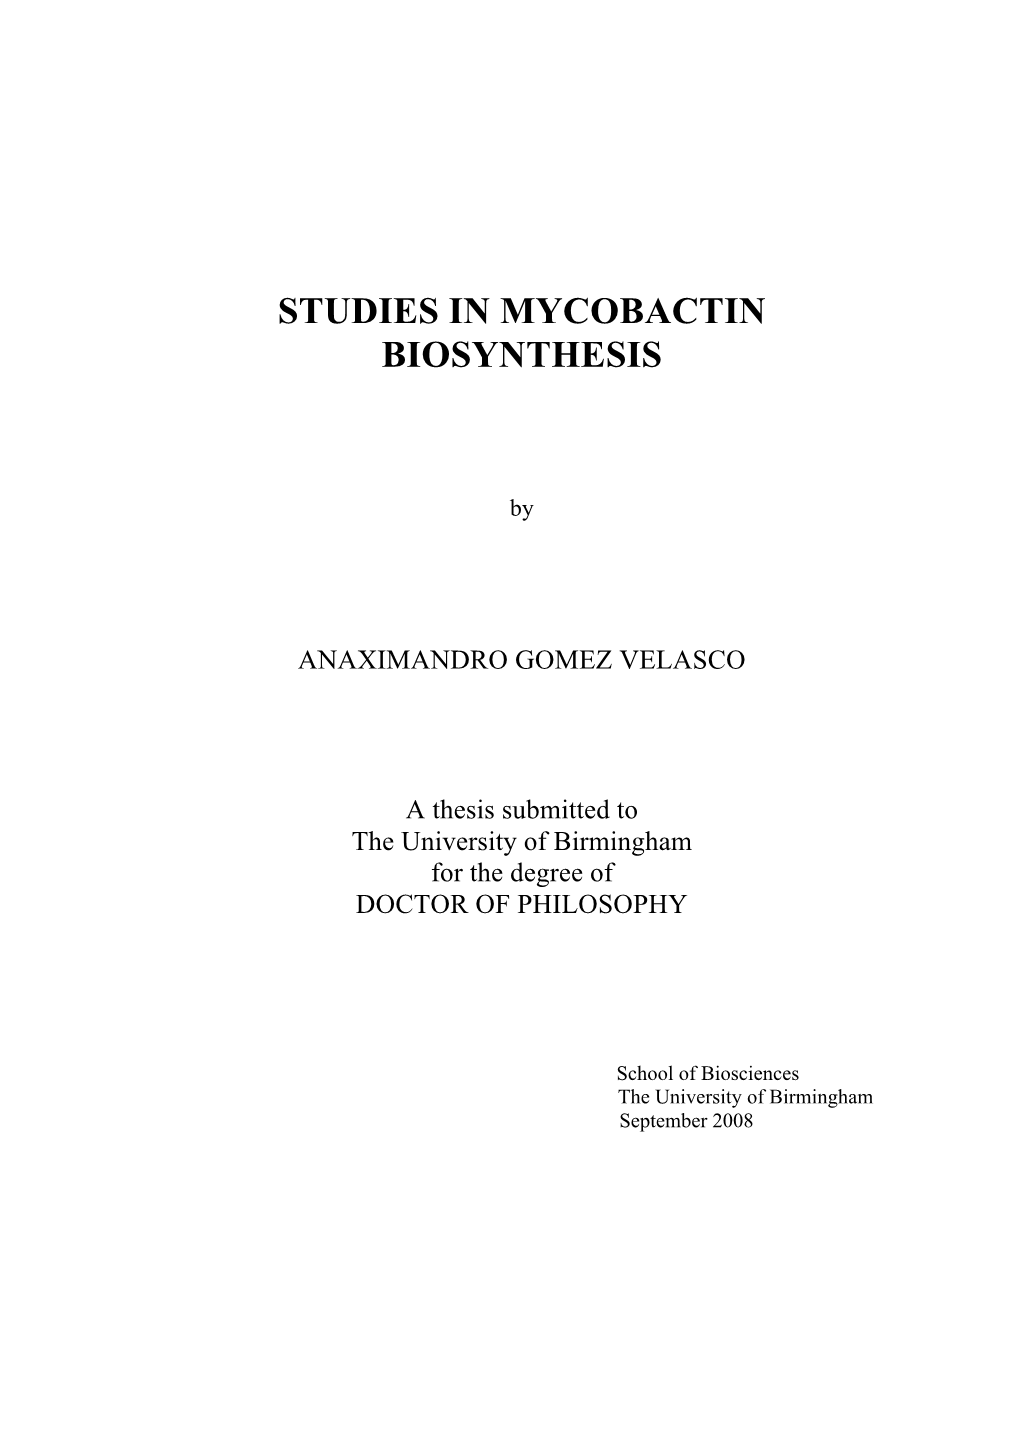 Studies in Mycobactin Biosynthesis